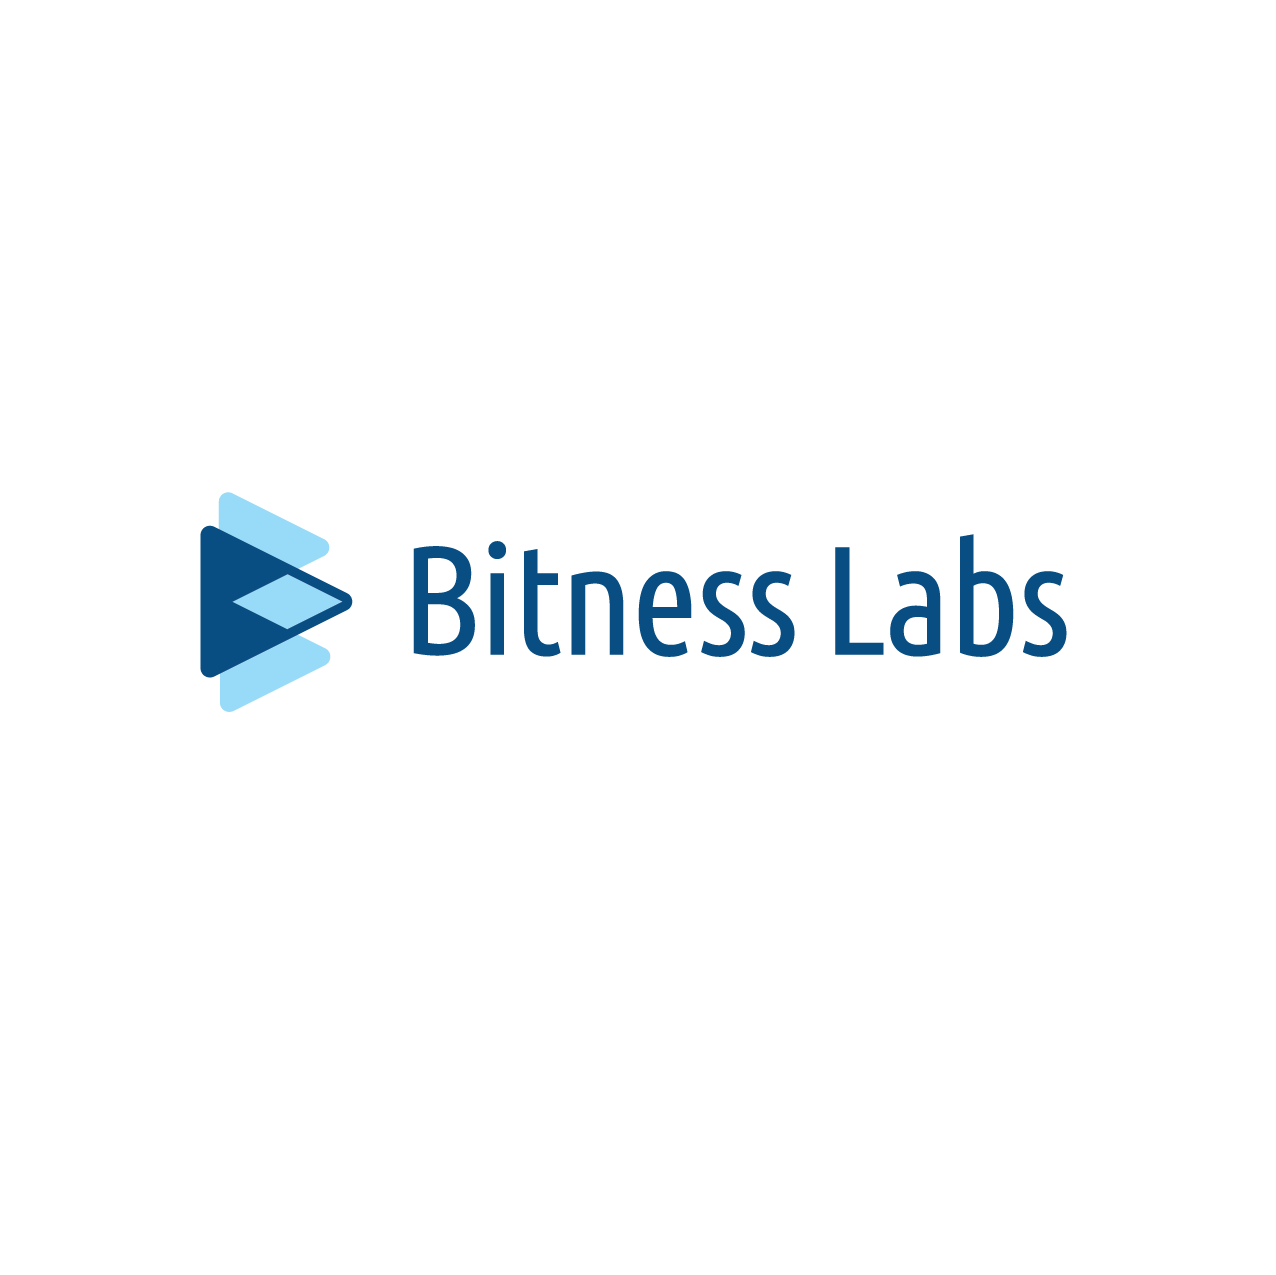 Bitness Labs